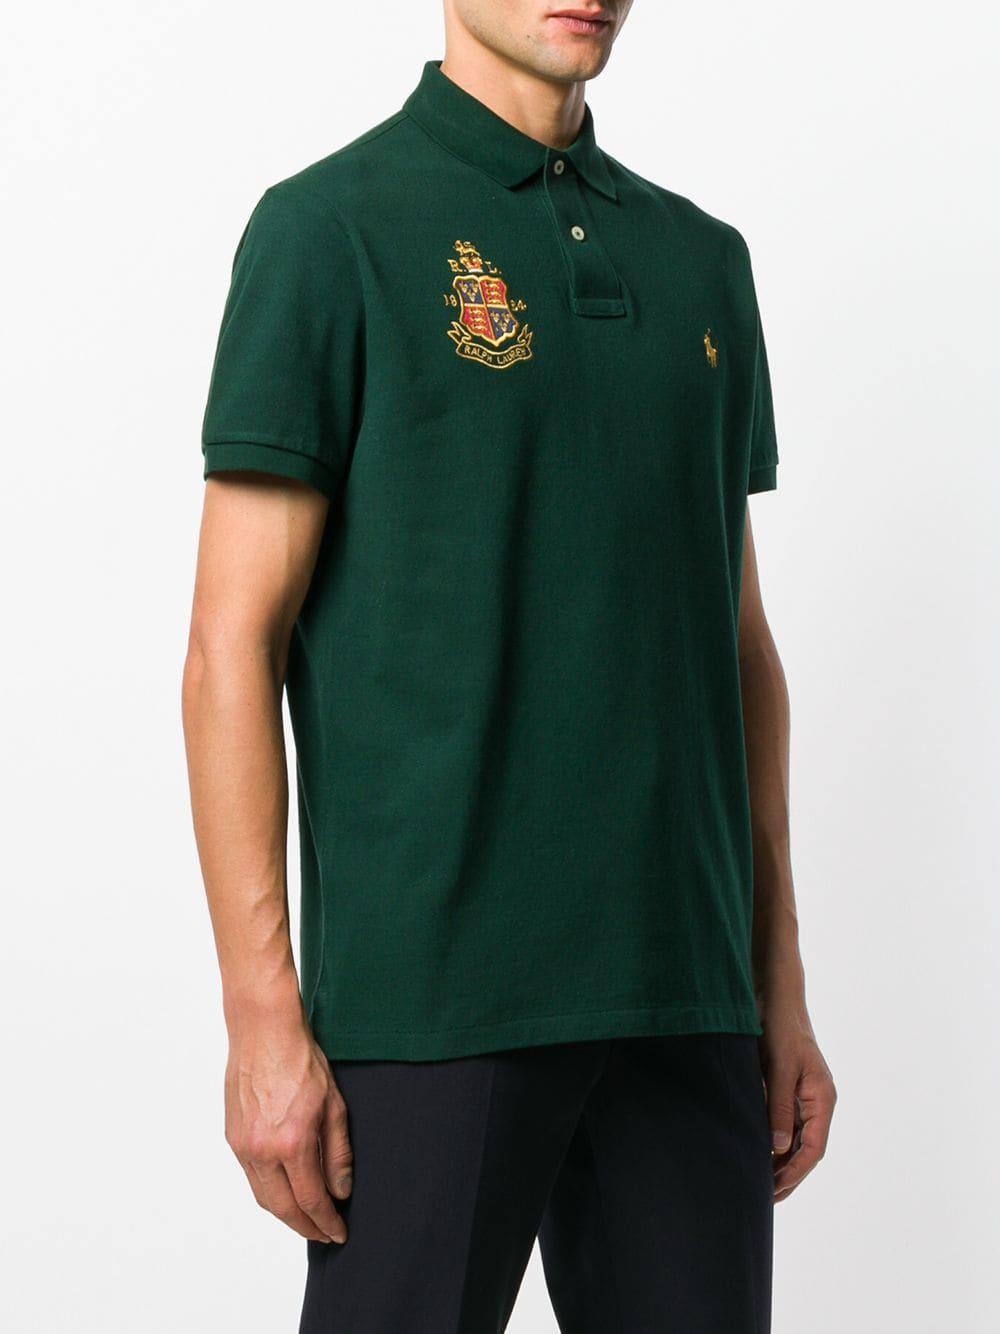 Polo Ralph Lauren Logo Polo Shirt in Green for Men - Lyst